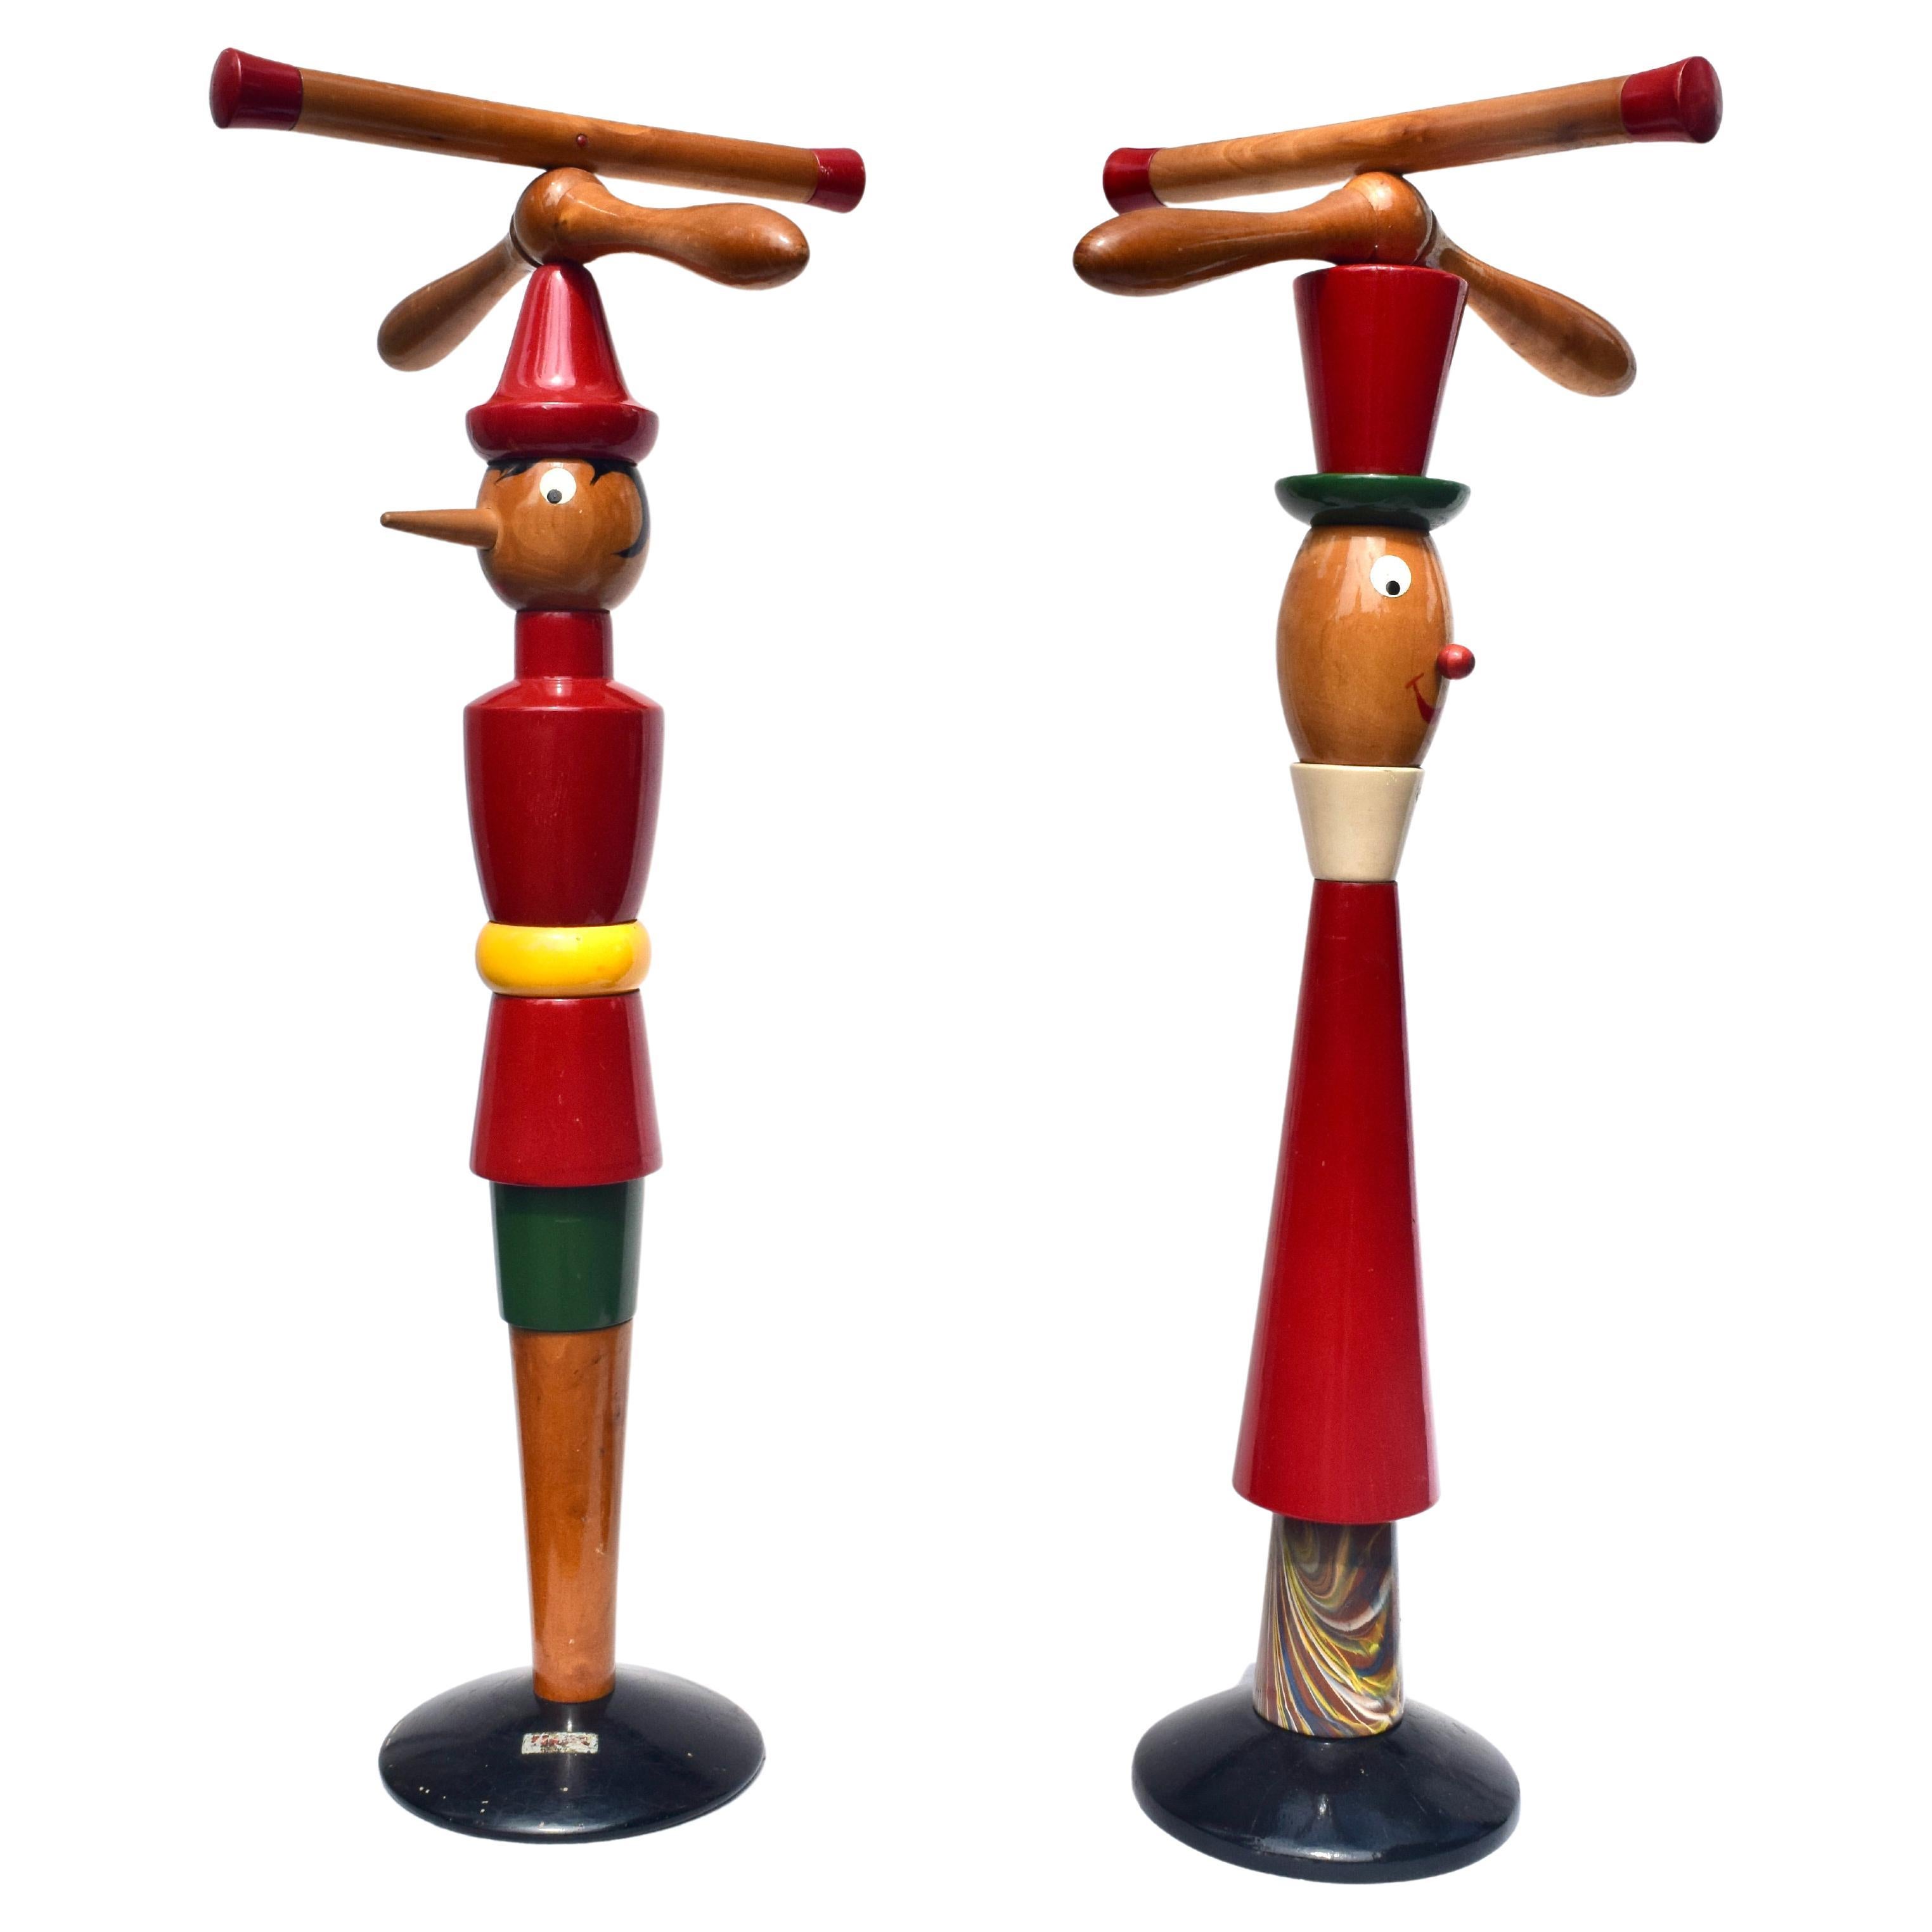 Valet Stands Pinocchio & Jiminy Cricket, 1940s Italian Design